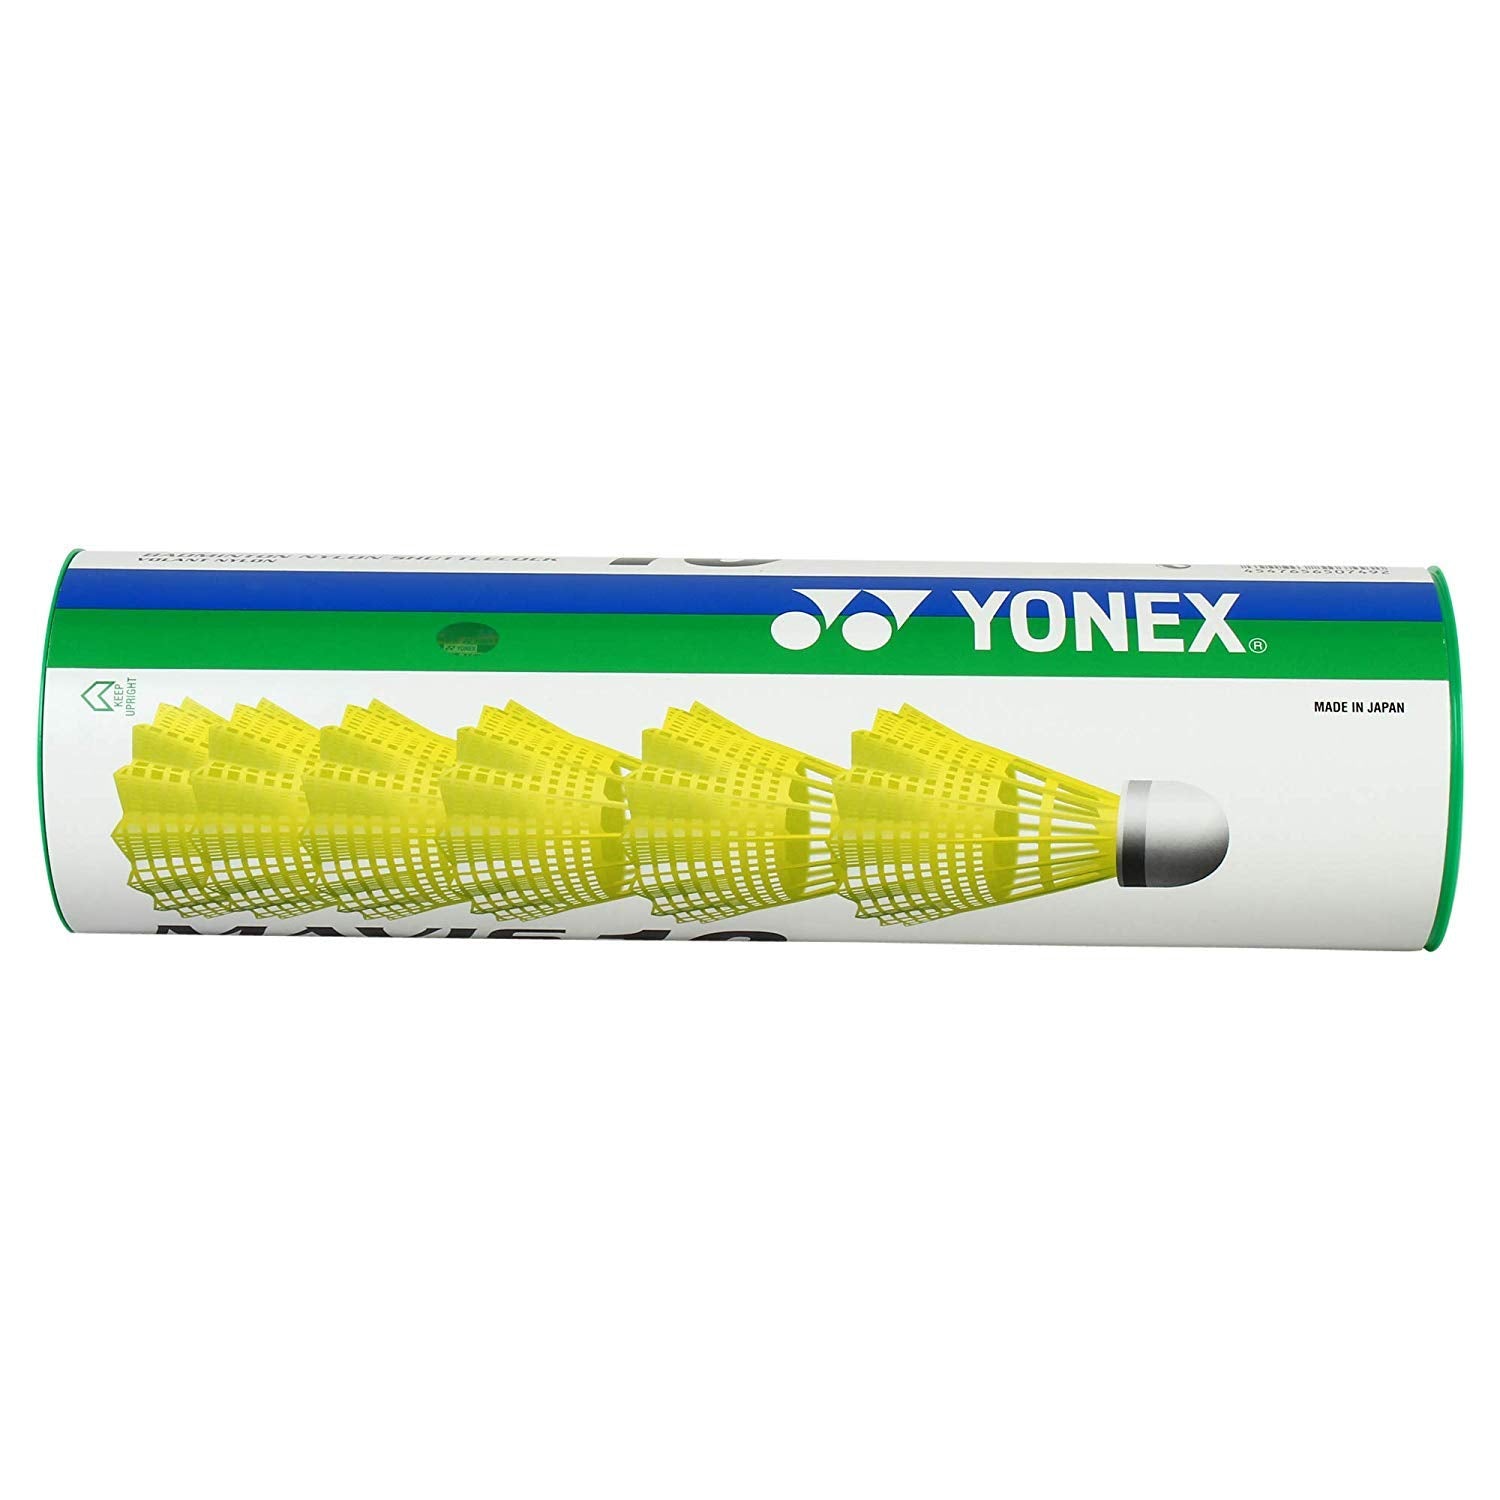 Yonex Mavis 10 Shuttle Cock (Yellow)